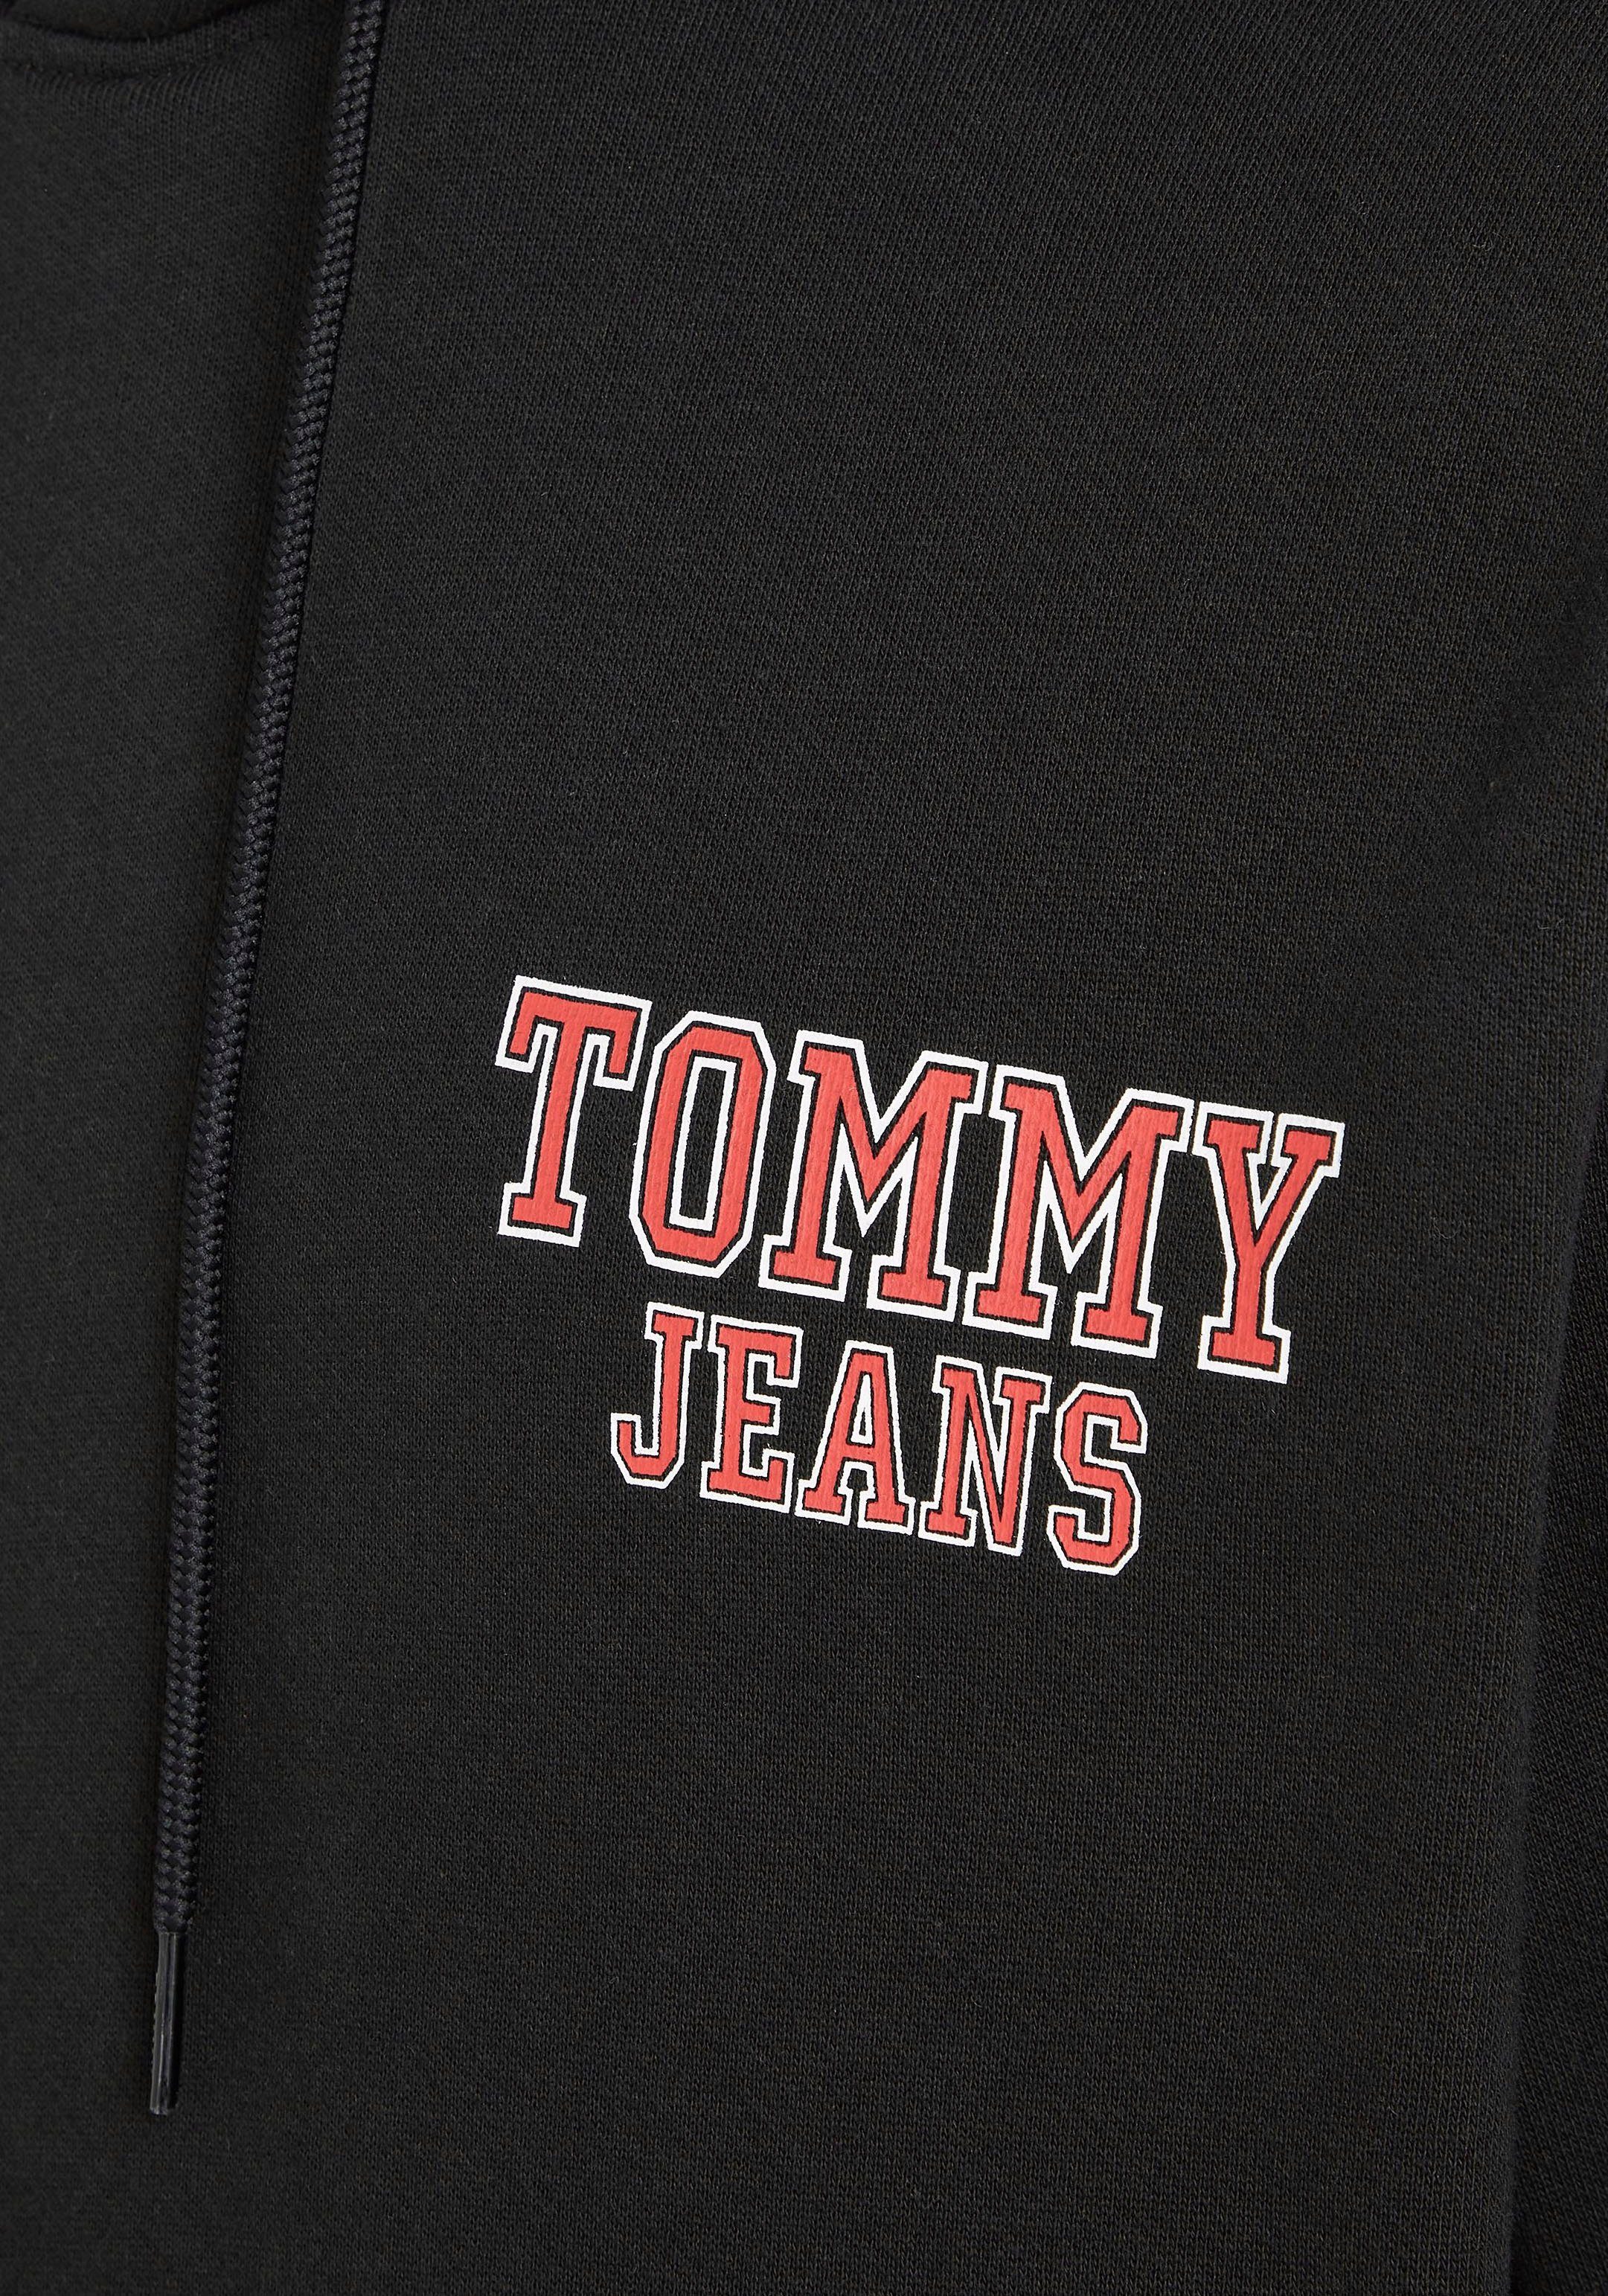 REG mit TJM HOODIE GRAPHIC Jeans Kapuze Black Tommy ENTRY Kapuzensweatshirt